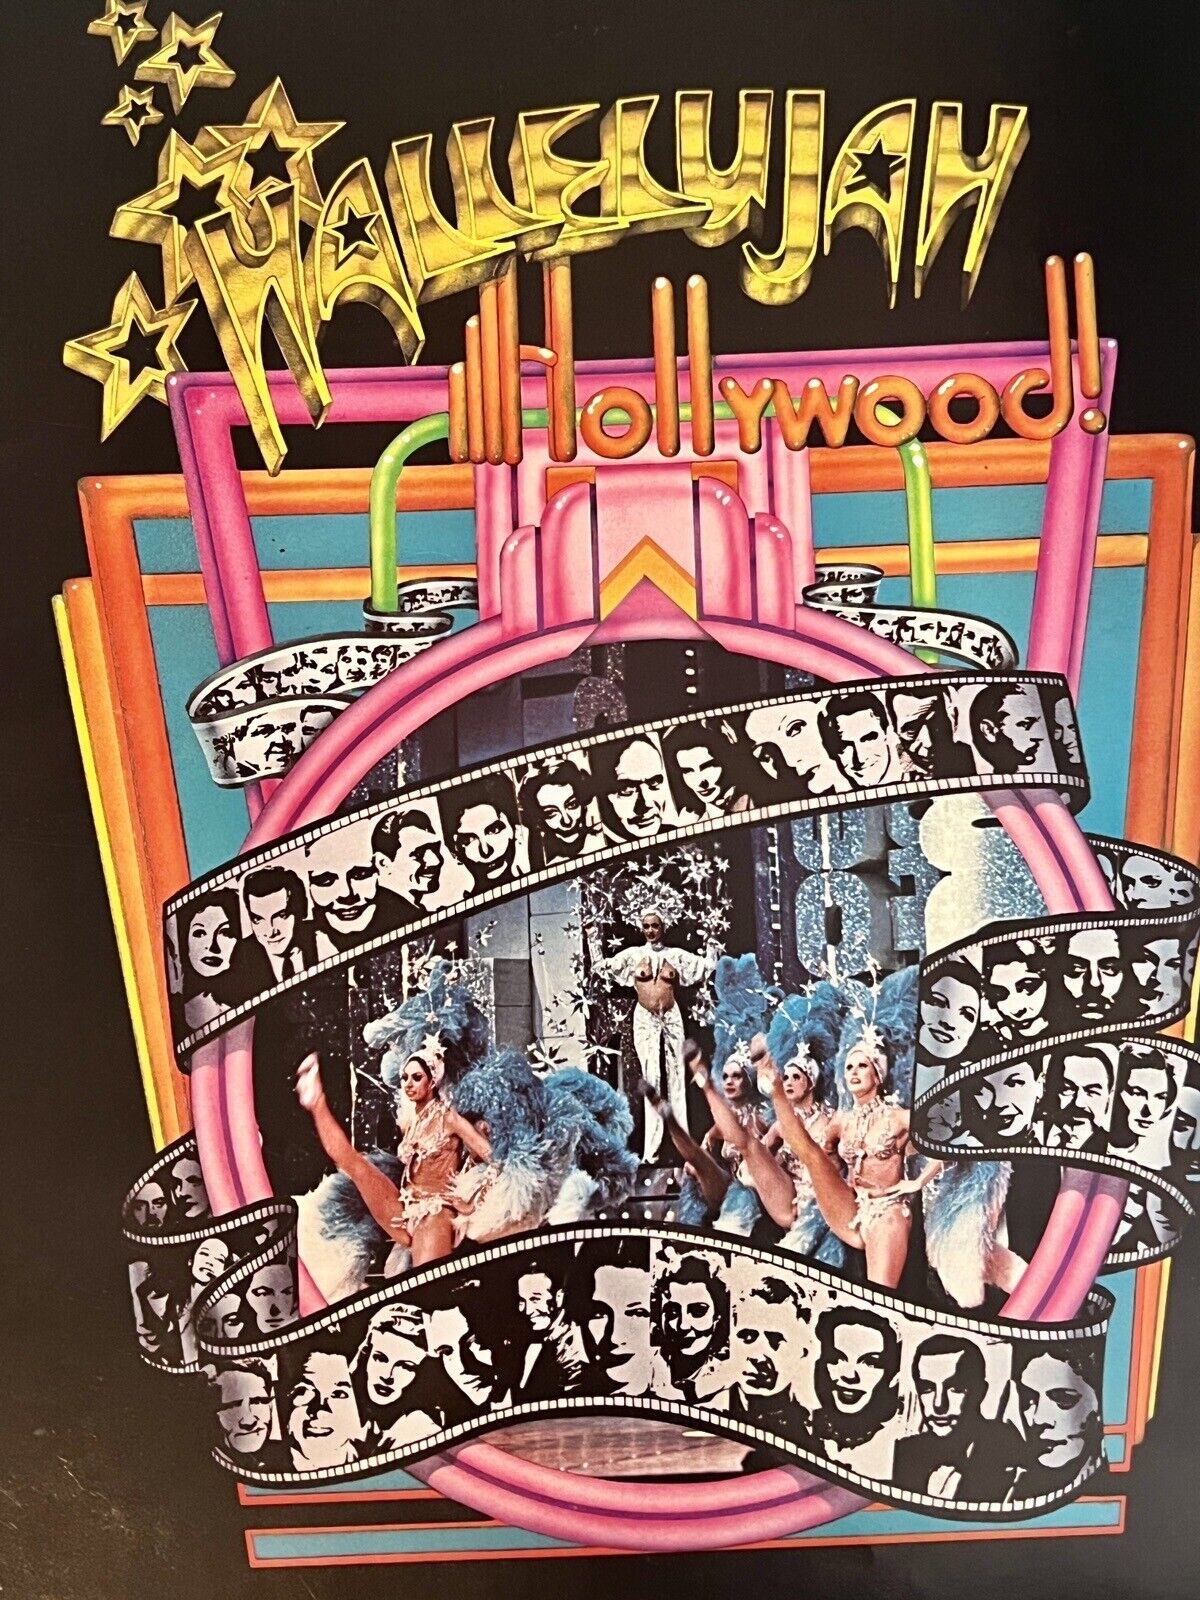 Las Vegas NC MGM Hallelujah Hollywood Program Show Girls 1970’s